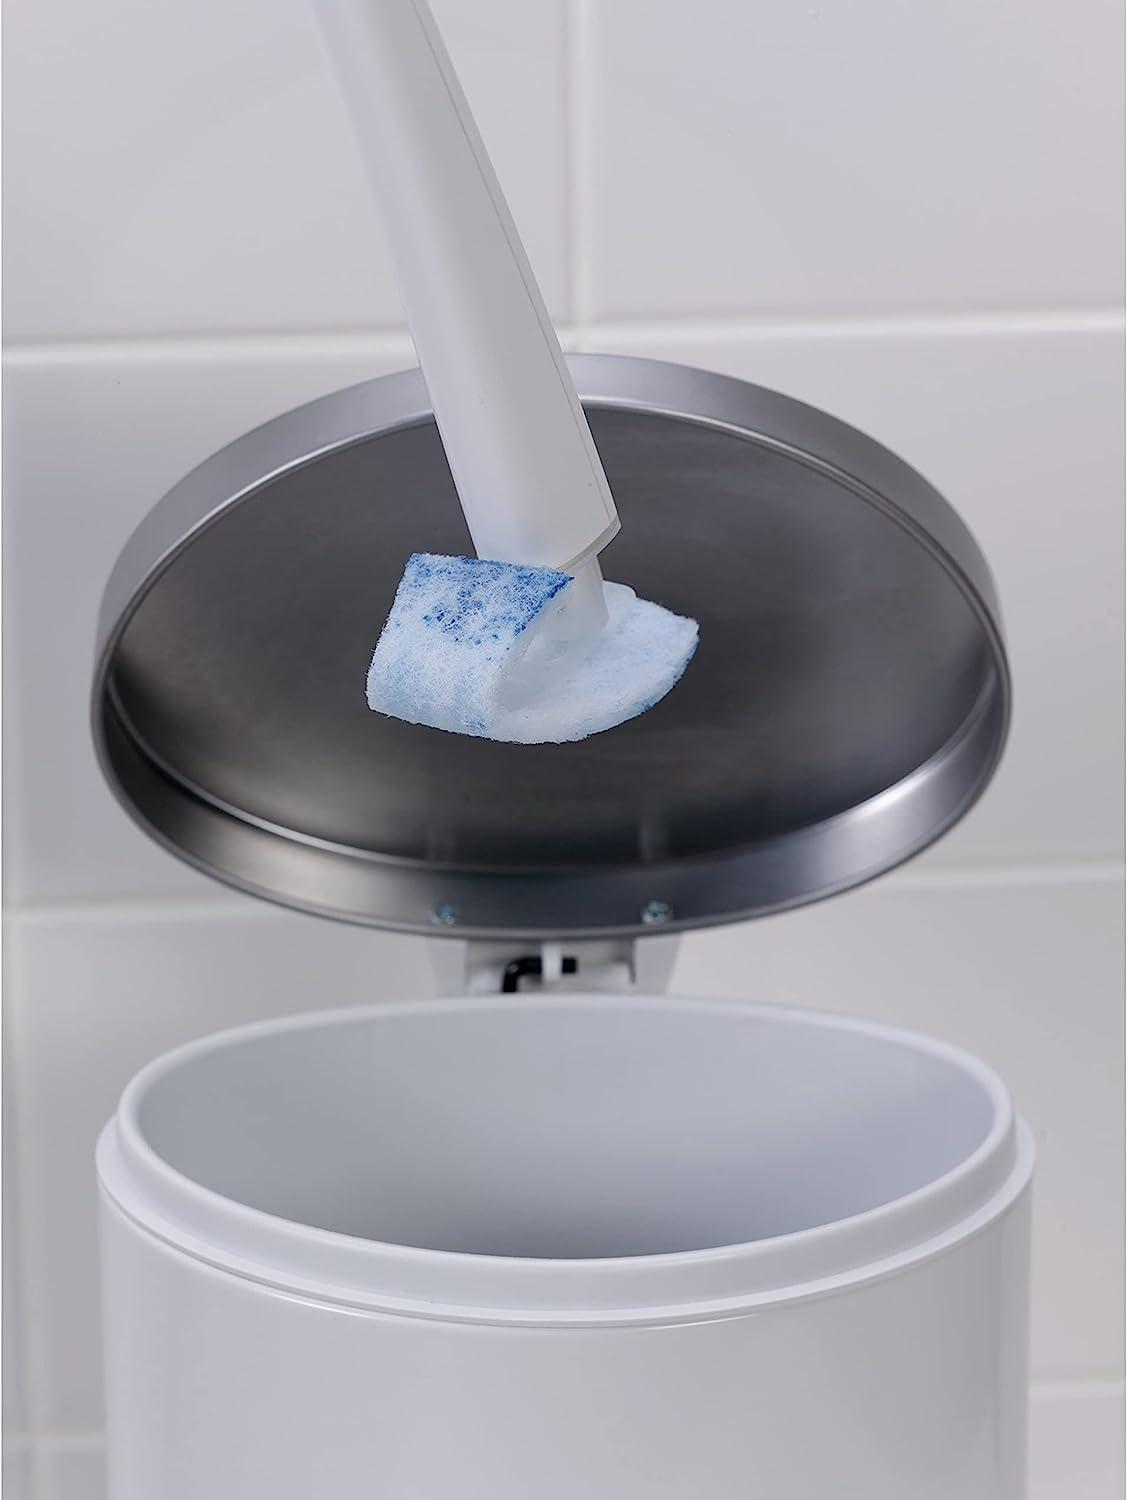 Scotch Brite Toilet Scrubber Starter Kit, Cleaning